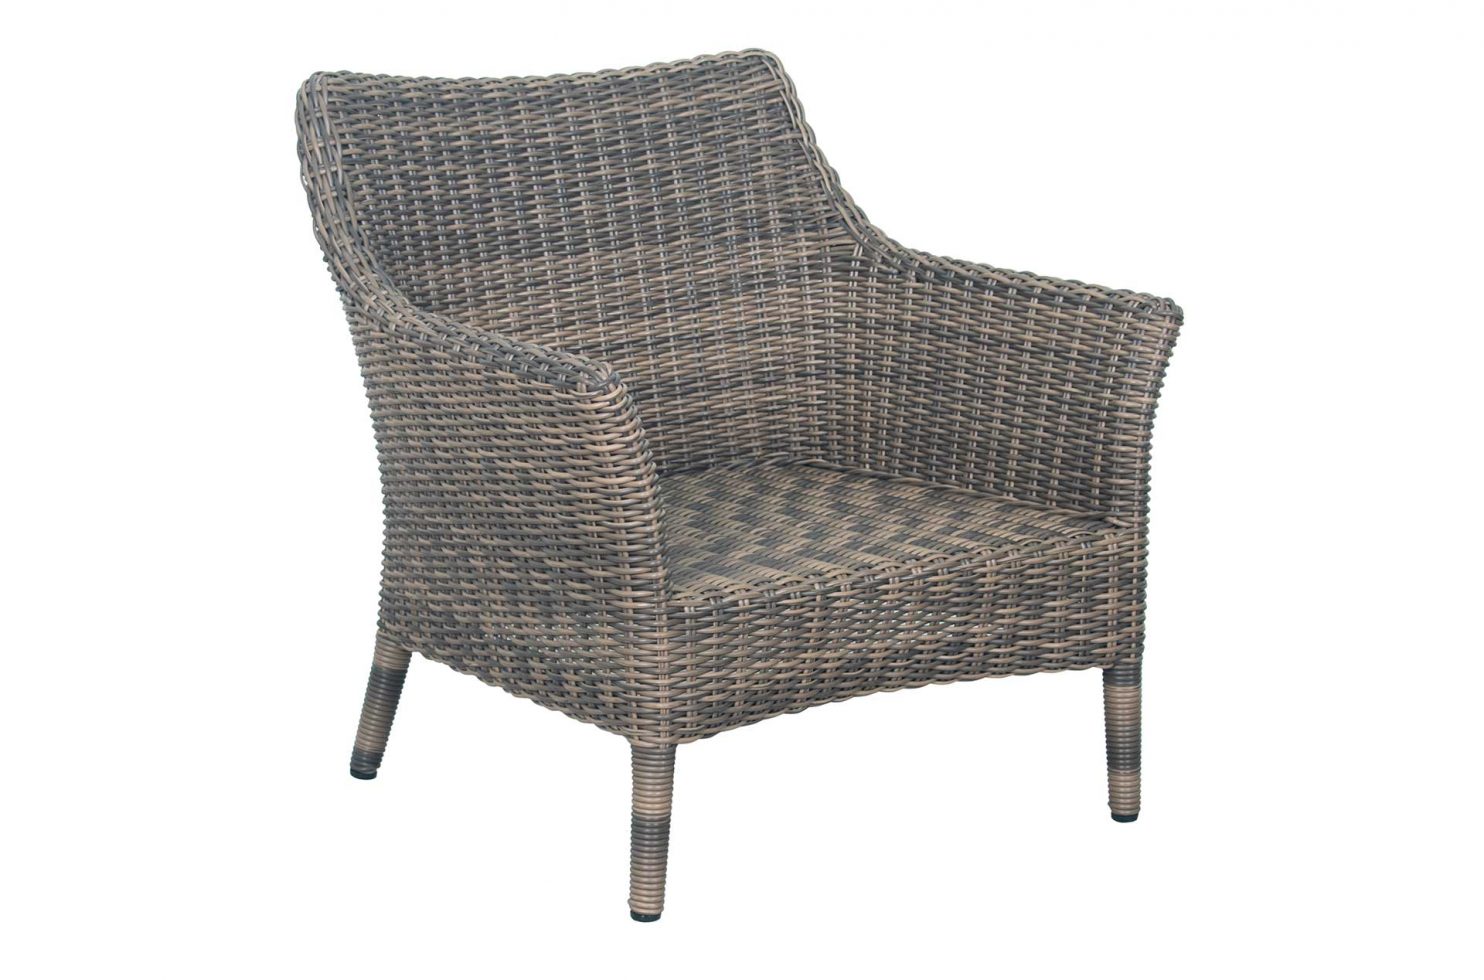 prov wicker leeward lounge chair S6207901407 no cushion 3Q front